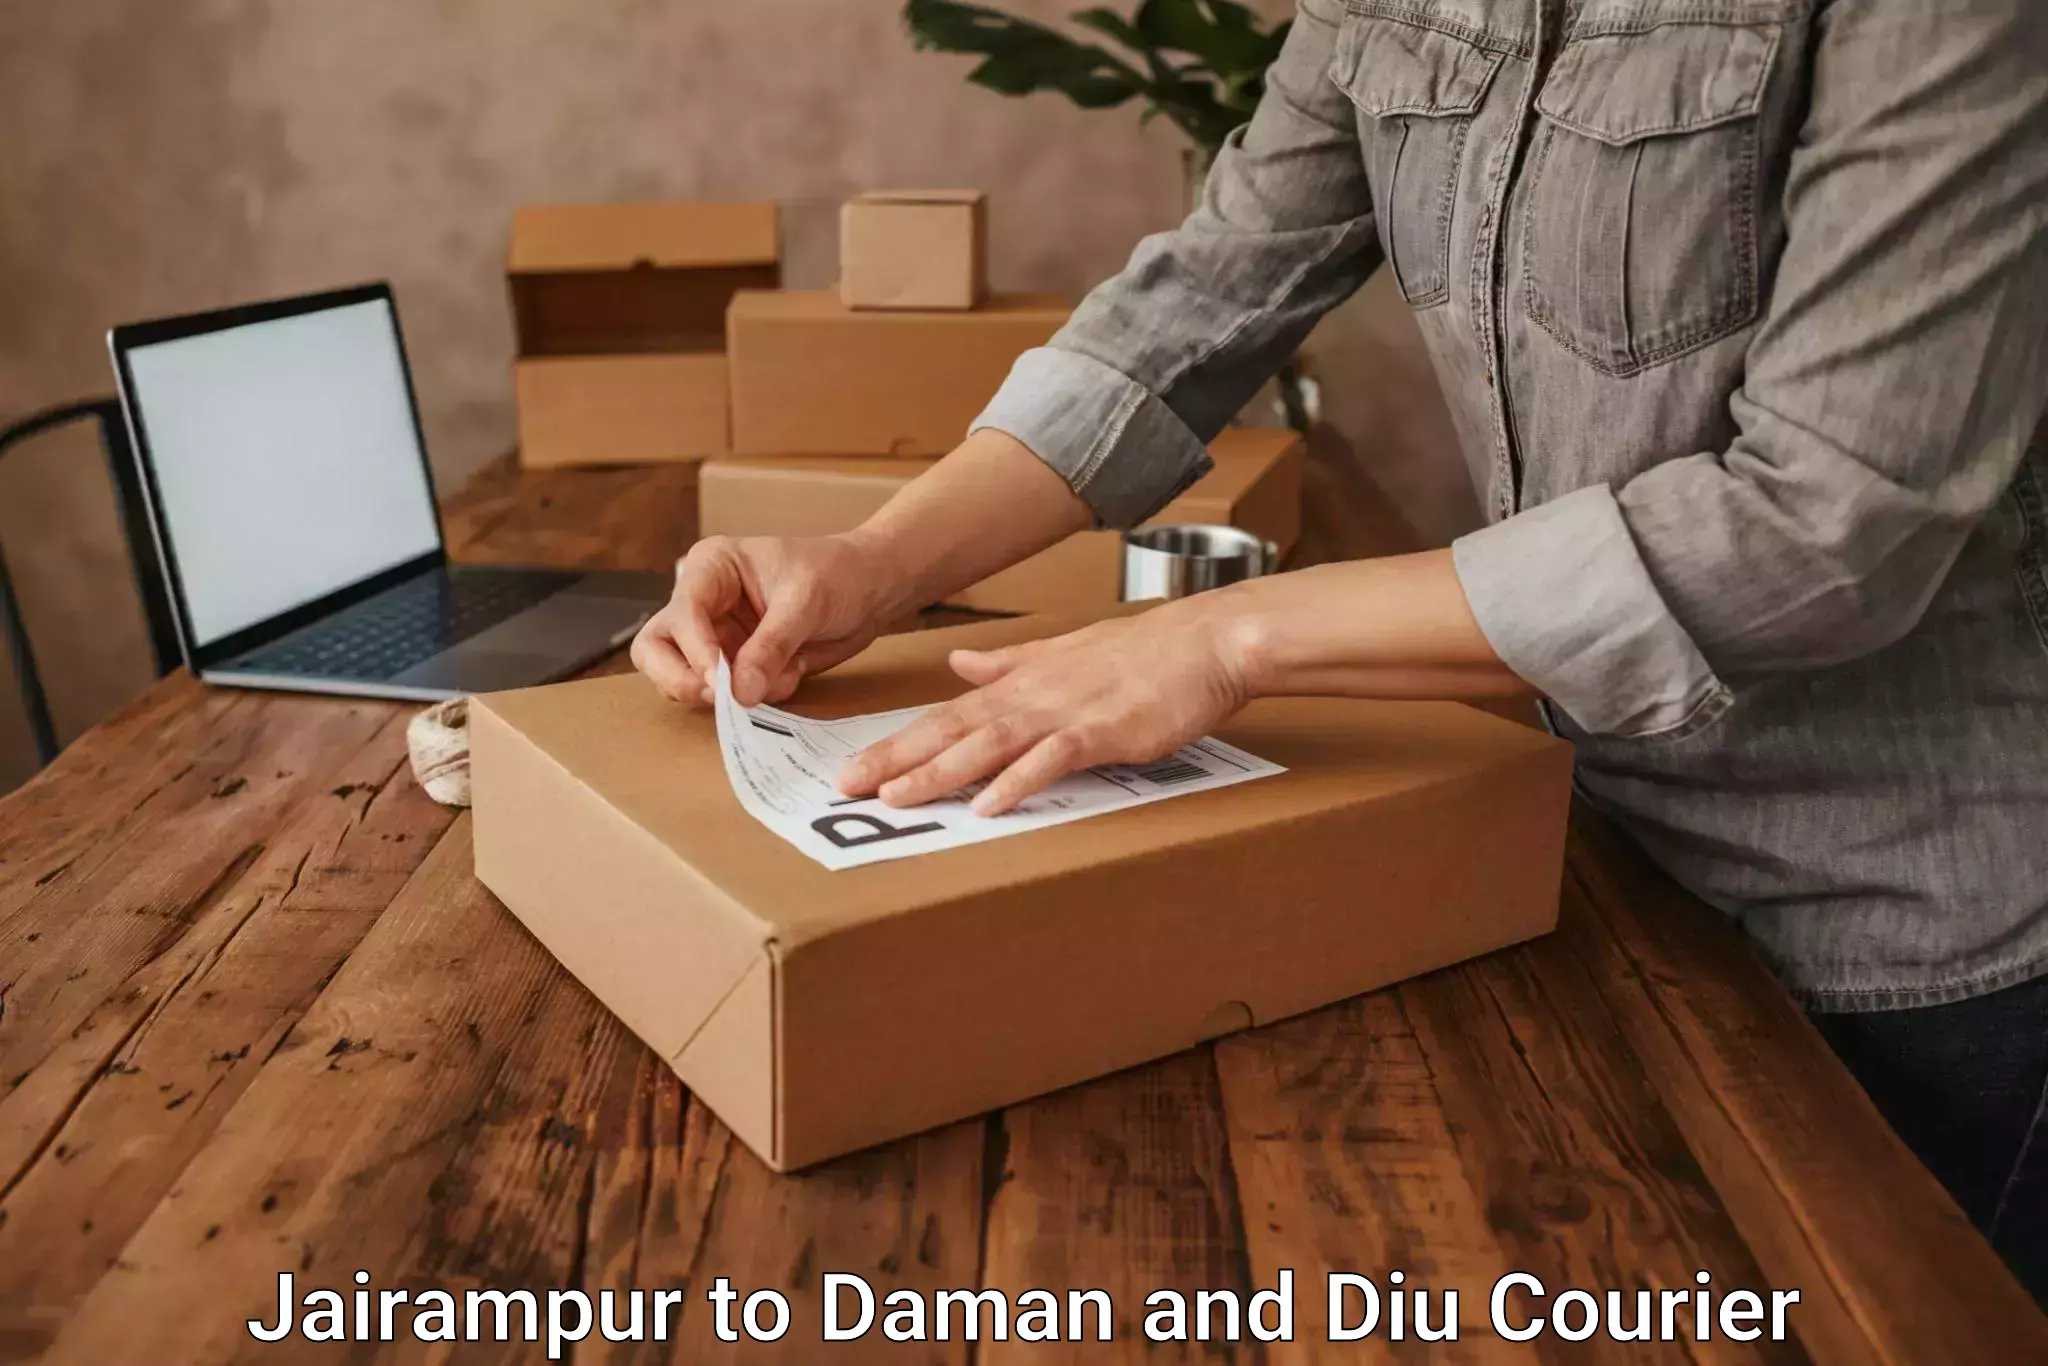 Courier service comparison Jairampur to Daman and Diu